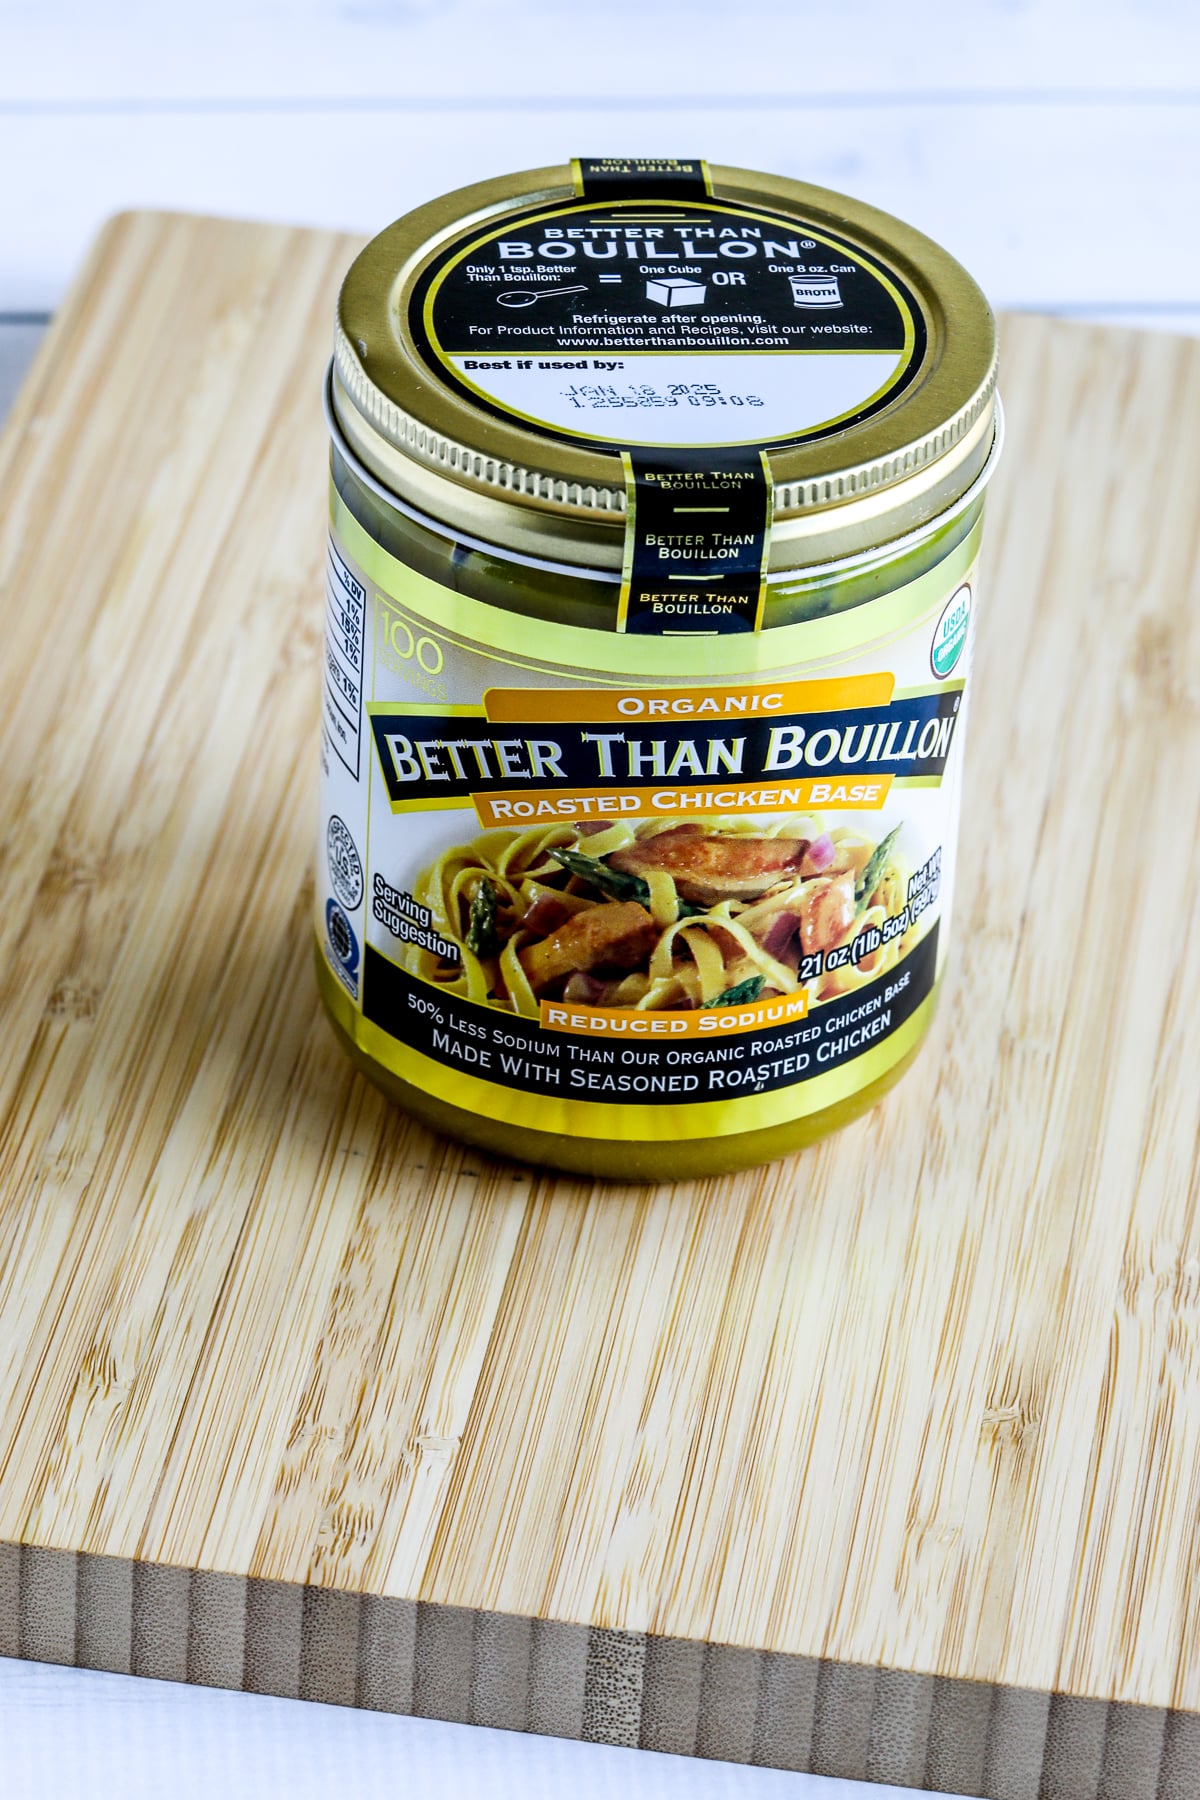 Better Than Bouillon Organic Low-Sodium Chicken Base jar shown on cutting board.